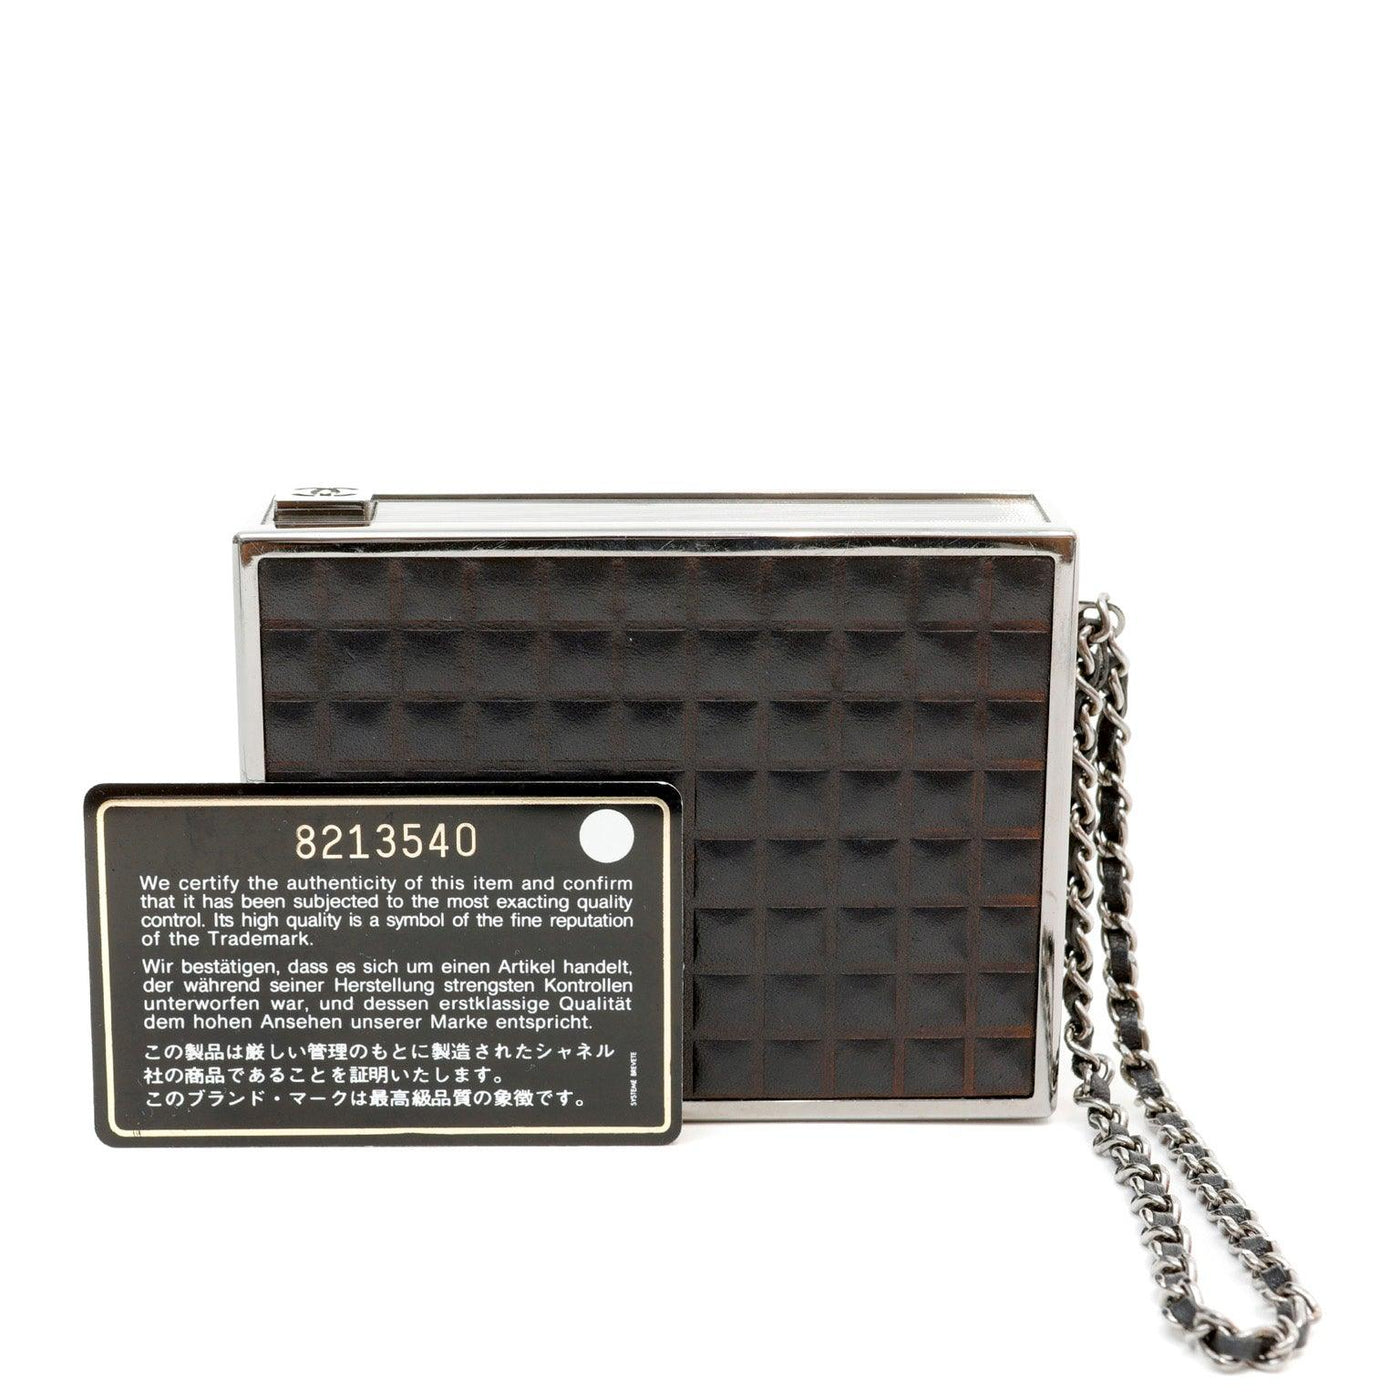 Chanel Vintage Brown Leather Box Purse Wristlet - Only Authentics